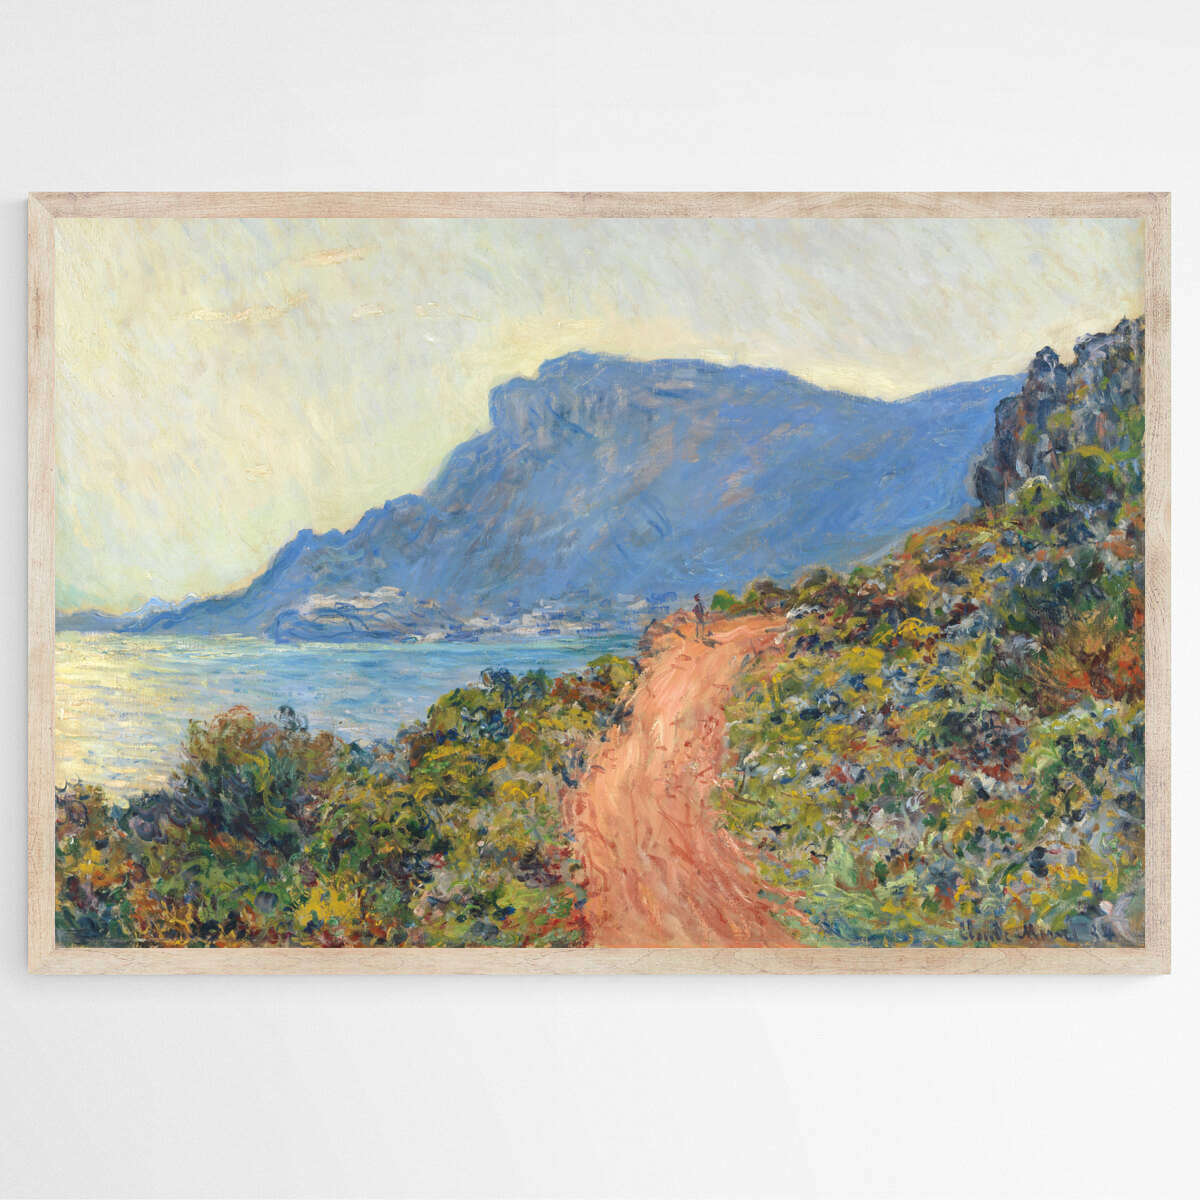 La Corniche near Monaco by Claude Monet | Claude Monet Wall Art Prints - The Canvas Hive